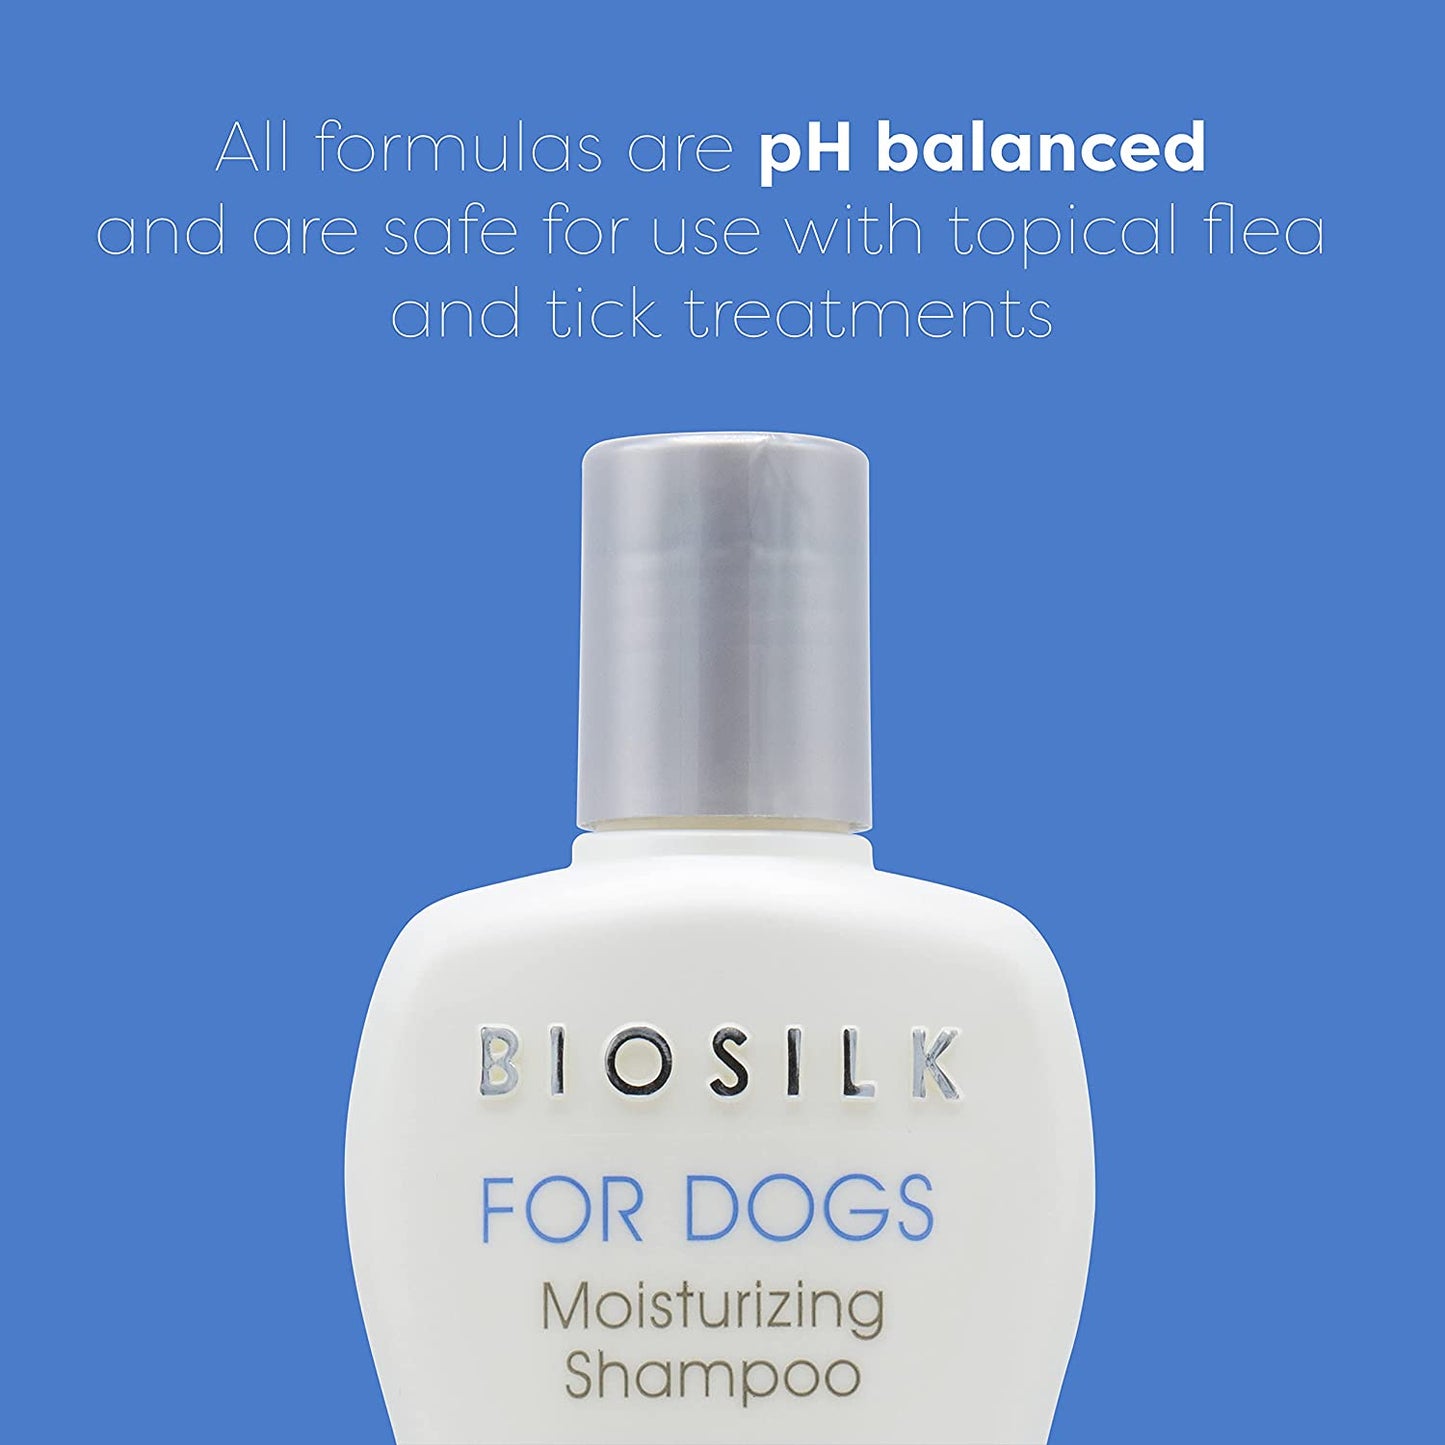 Biosilk for Dogs Silk Therapy Moisturizing Shampoo | Best Moisturizing Shampoo for All Dogs and Dogs with Dry, Itchy, or Sensitive Skin | 12 Oz Dog Shampoo